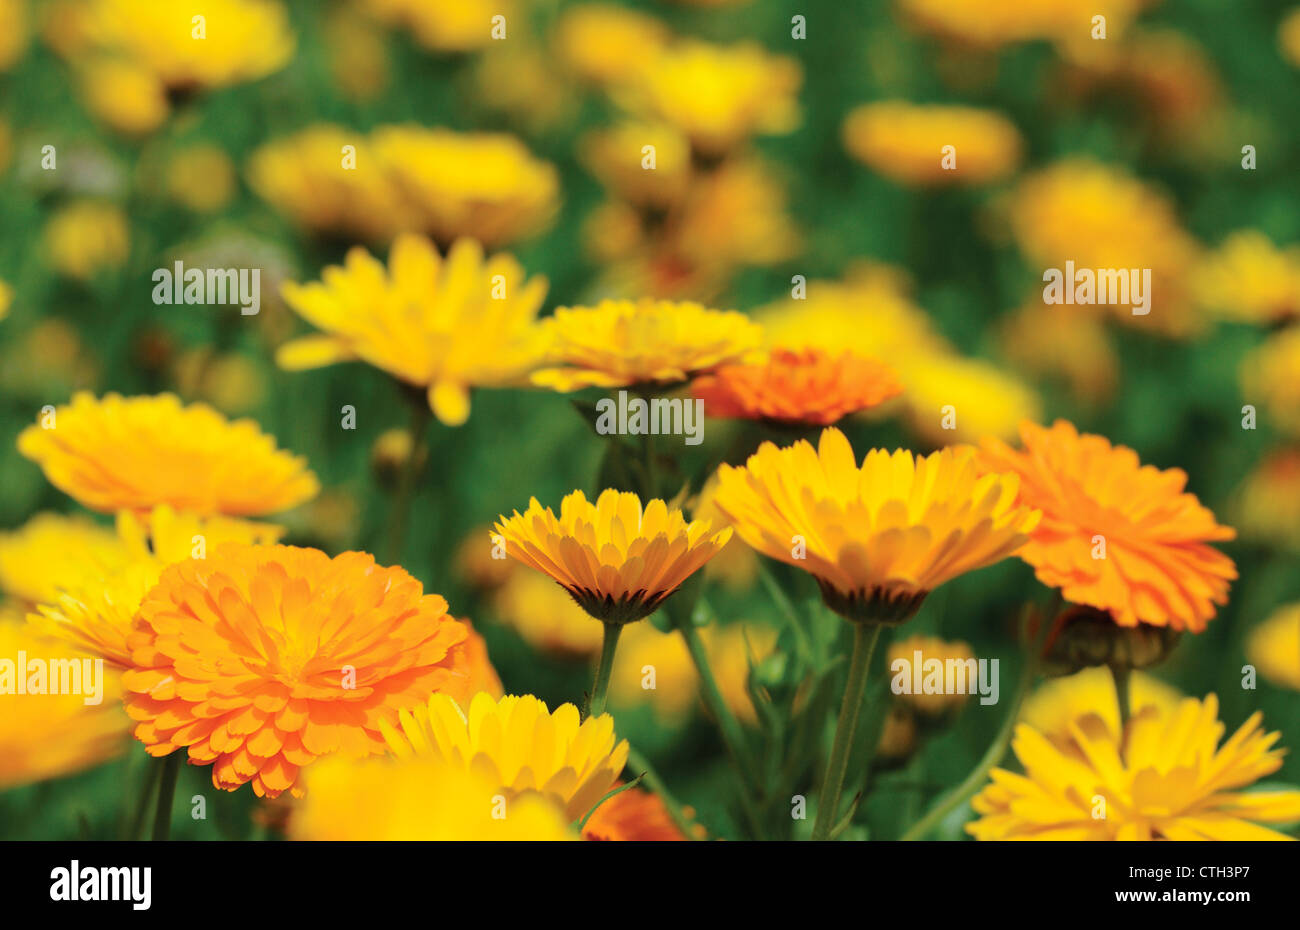 Calendula officinalis, Marigold, massed yellow flowers growing outdoors. Stock Photo